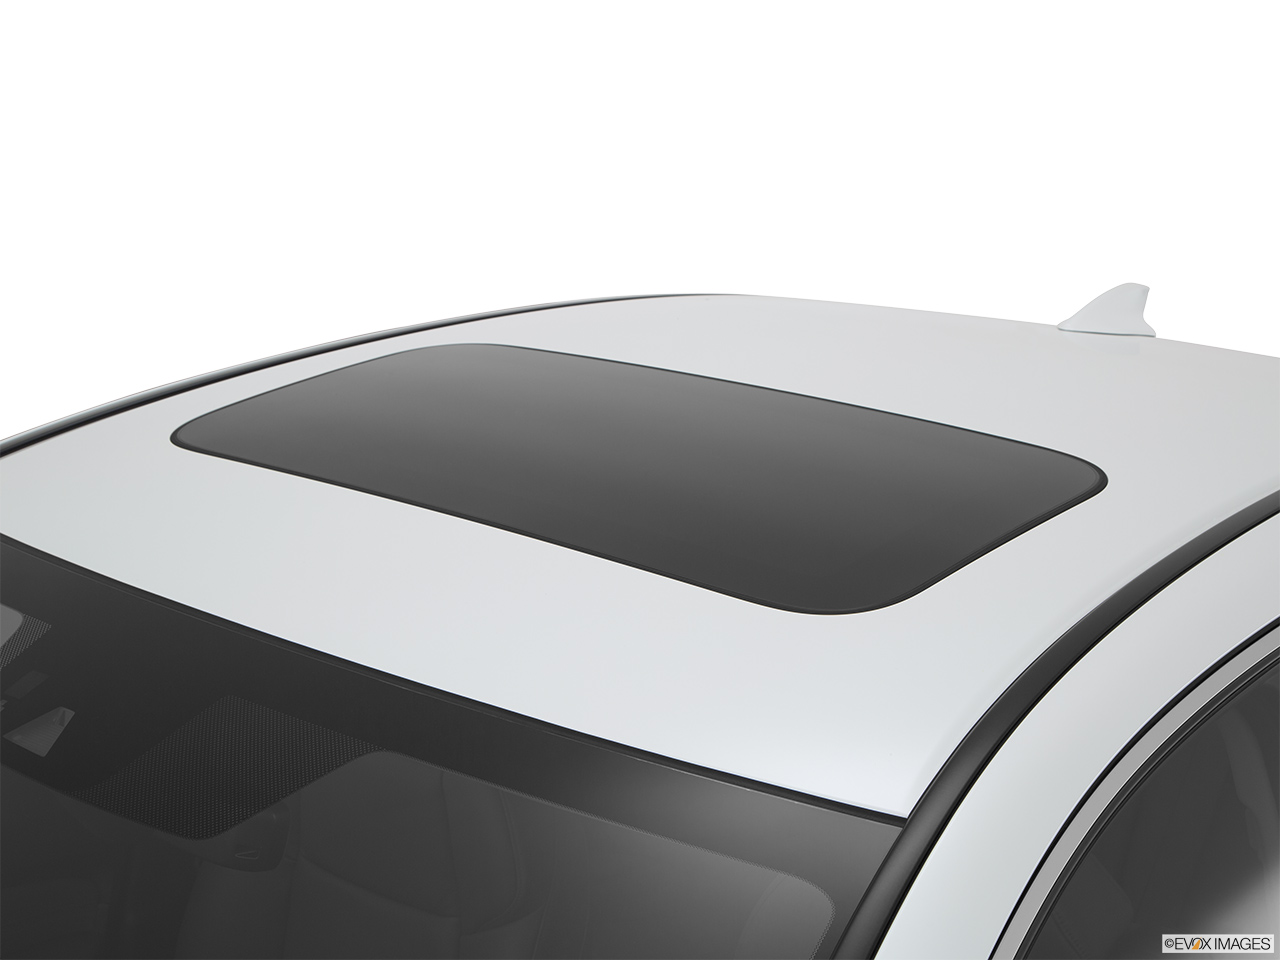 2015 Acura TLX 3.5 V-6 9-AT SH-AWD Sunroof/moonroof. 